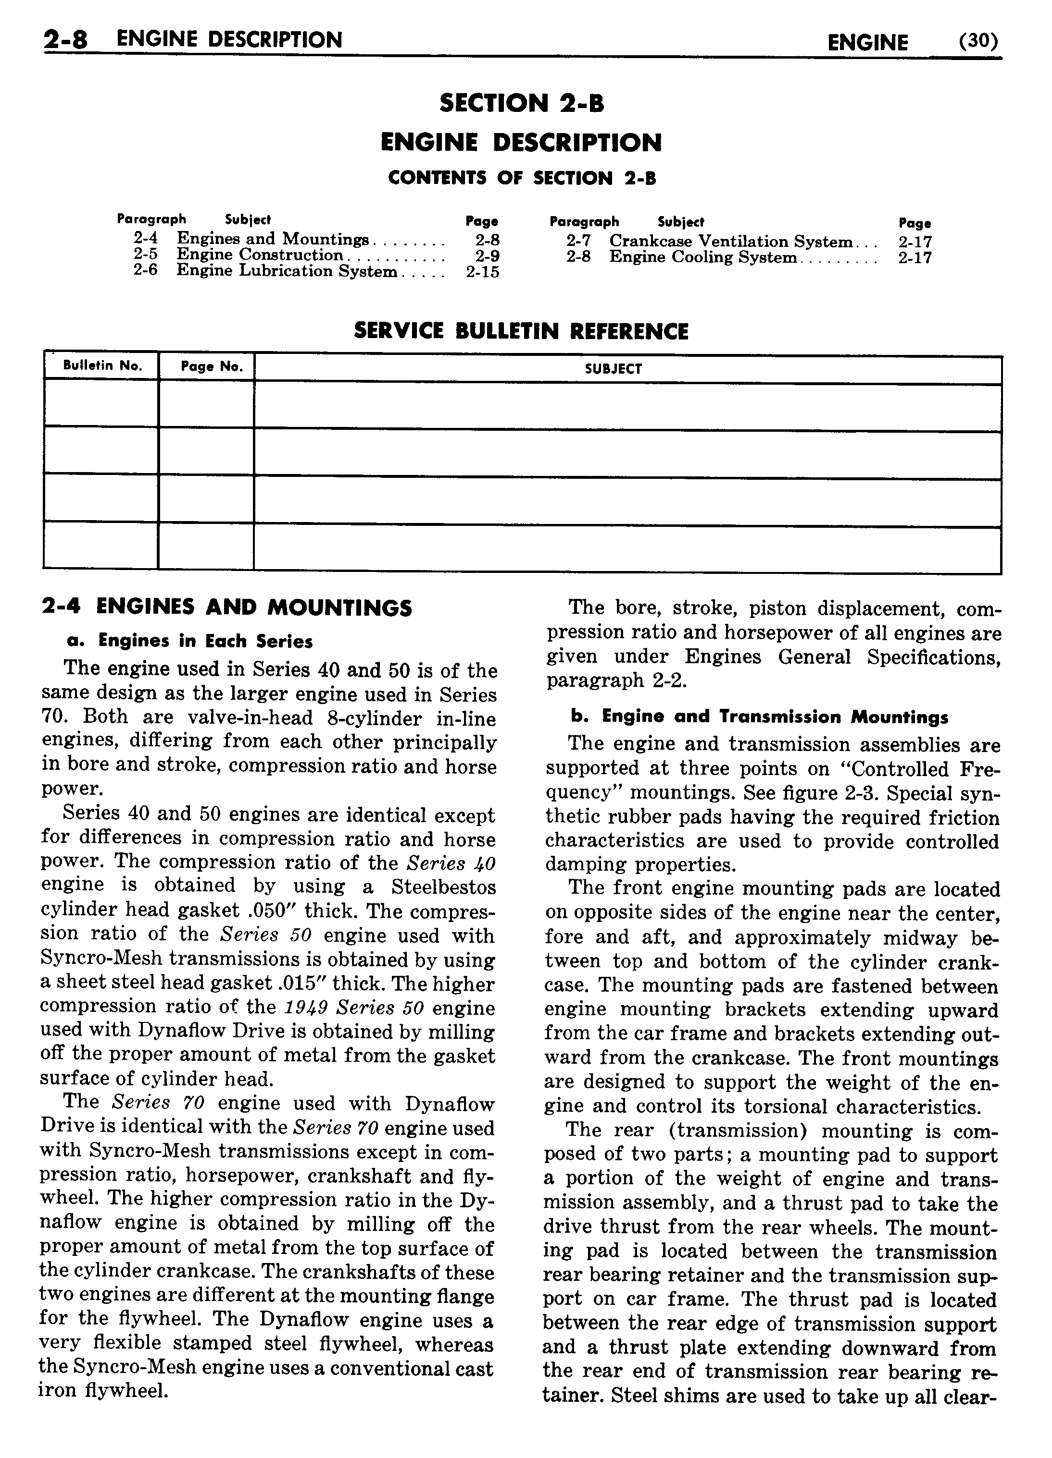 n_03 1948 Buick Shop Manual - Engine-008-008.jpg